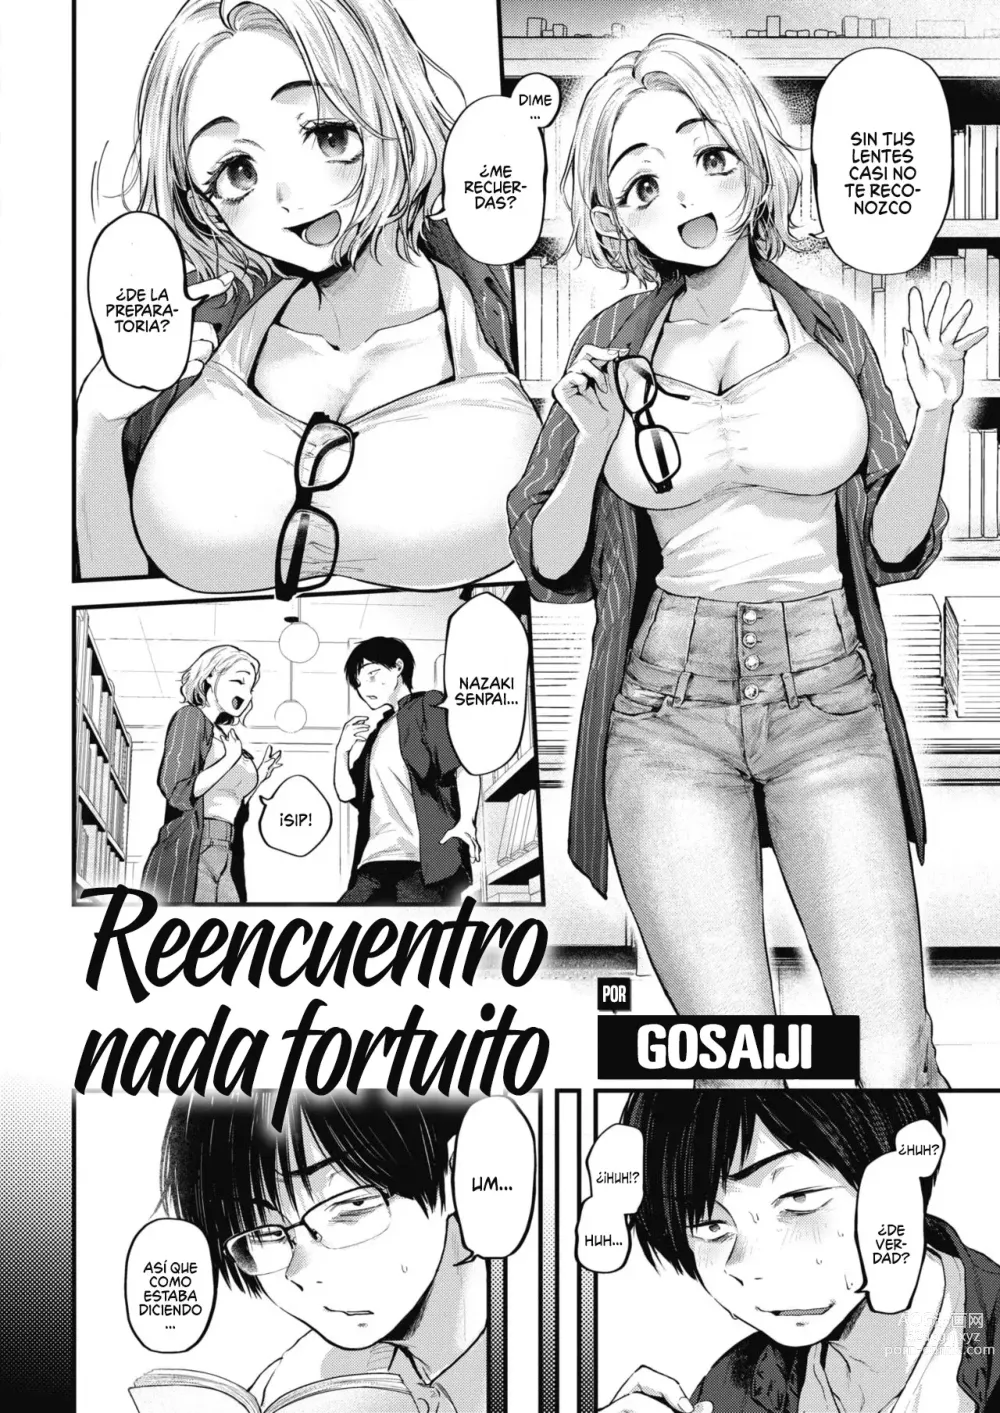 Page 2 of manga Reencuentro nada fortuito